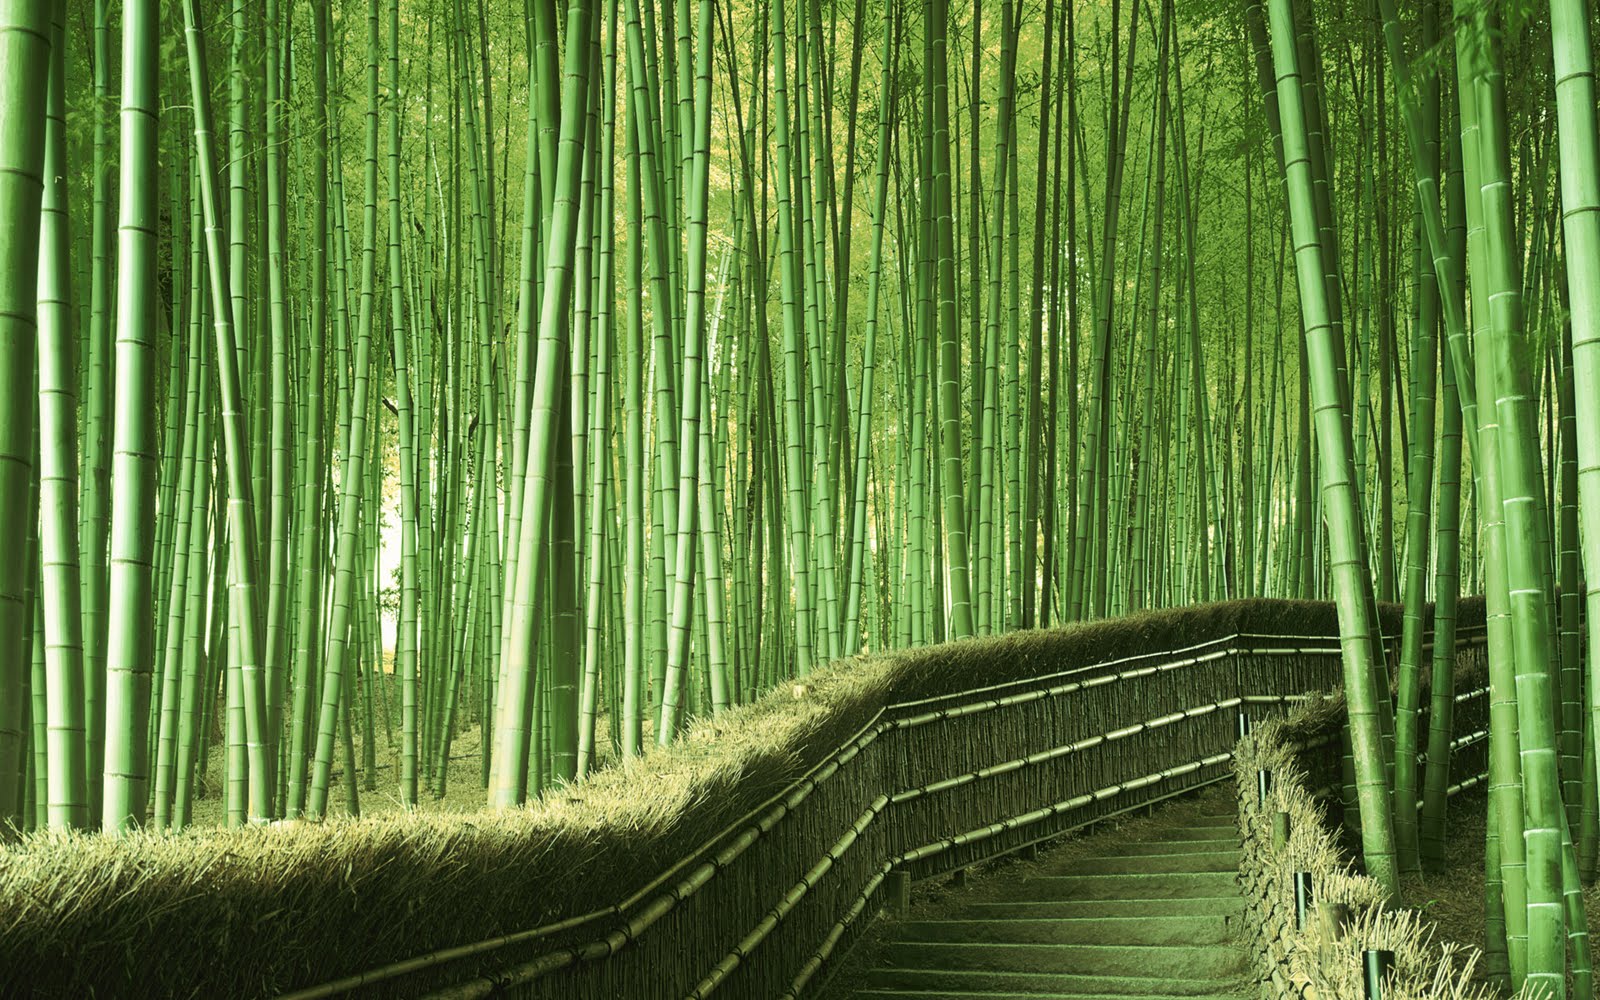 Hd Bamboo Plant Wallpapers Desktop Wallpapers Afalchi Free images wallpape [afalchi.blogspot.com]